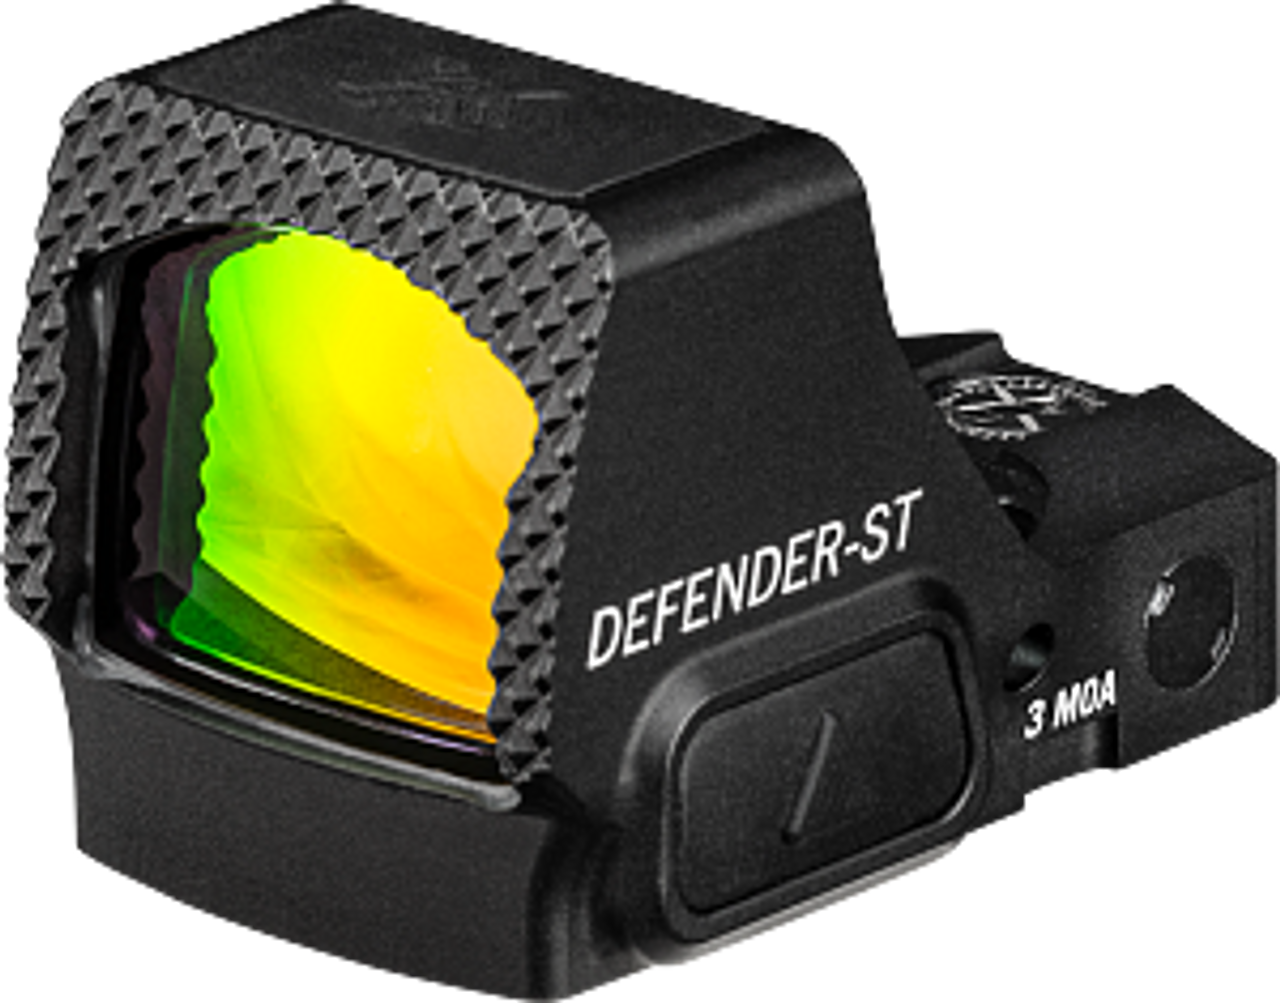 Vortex Defender-ST 3 MOA Micro Red Dot